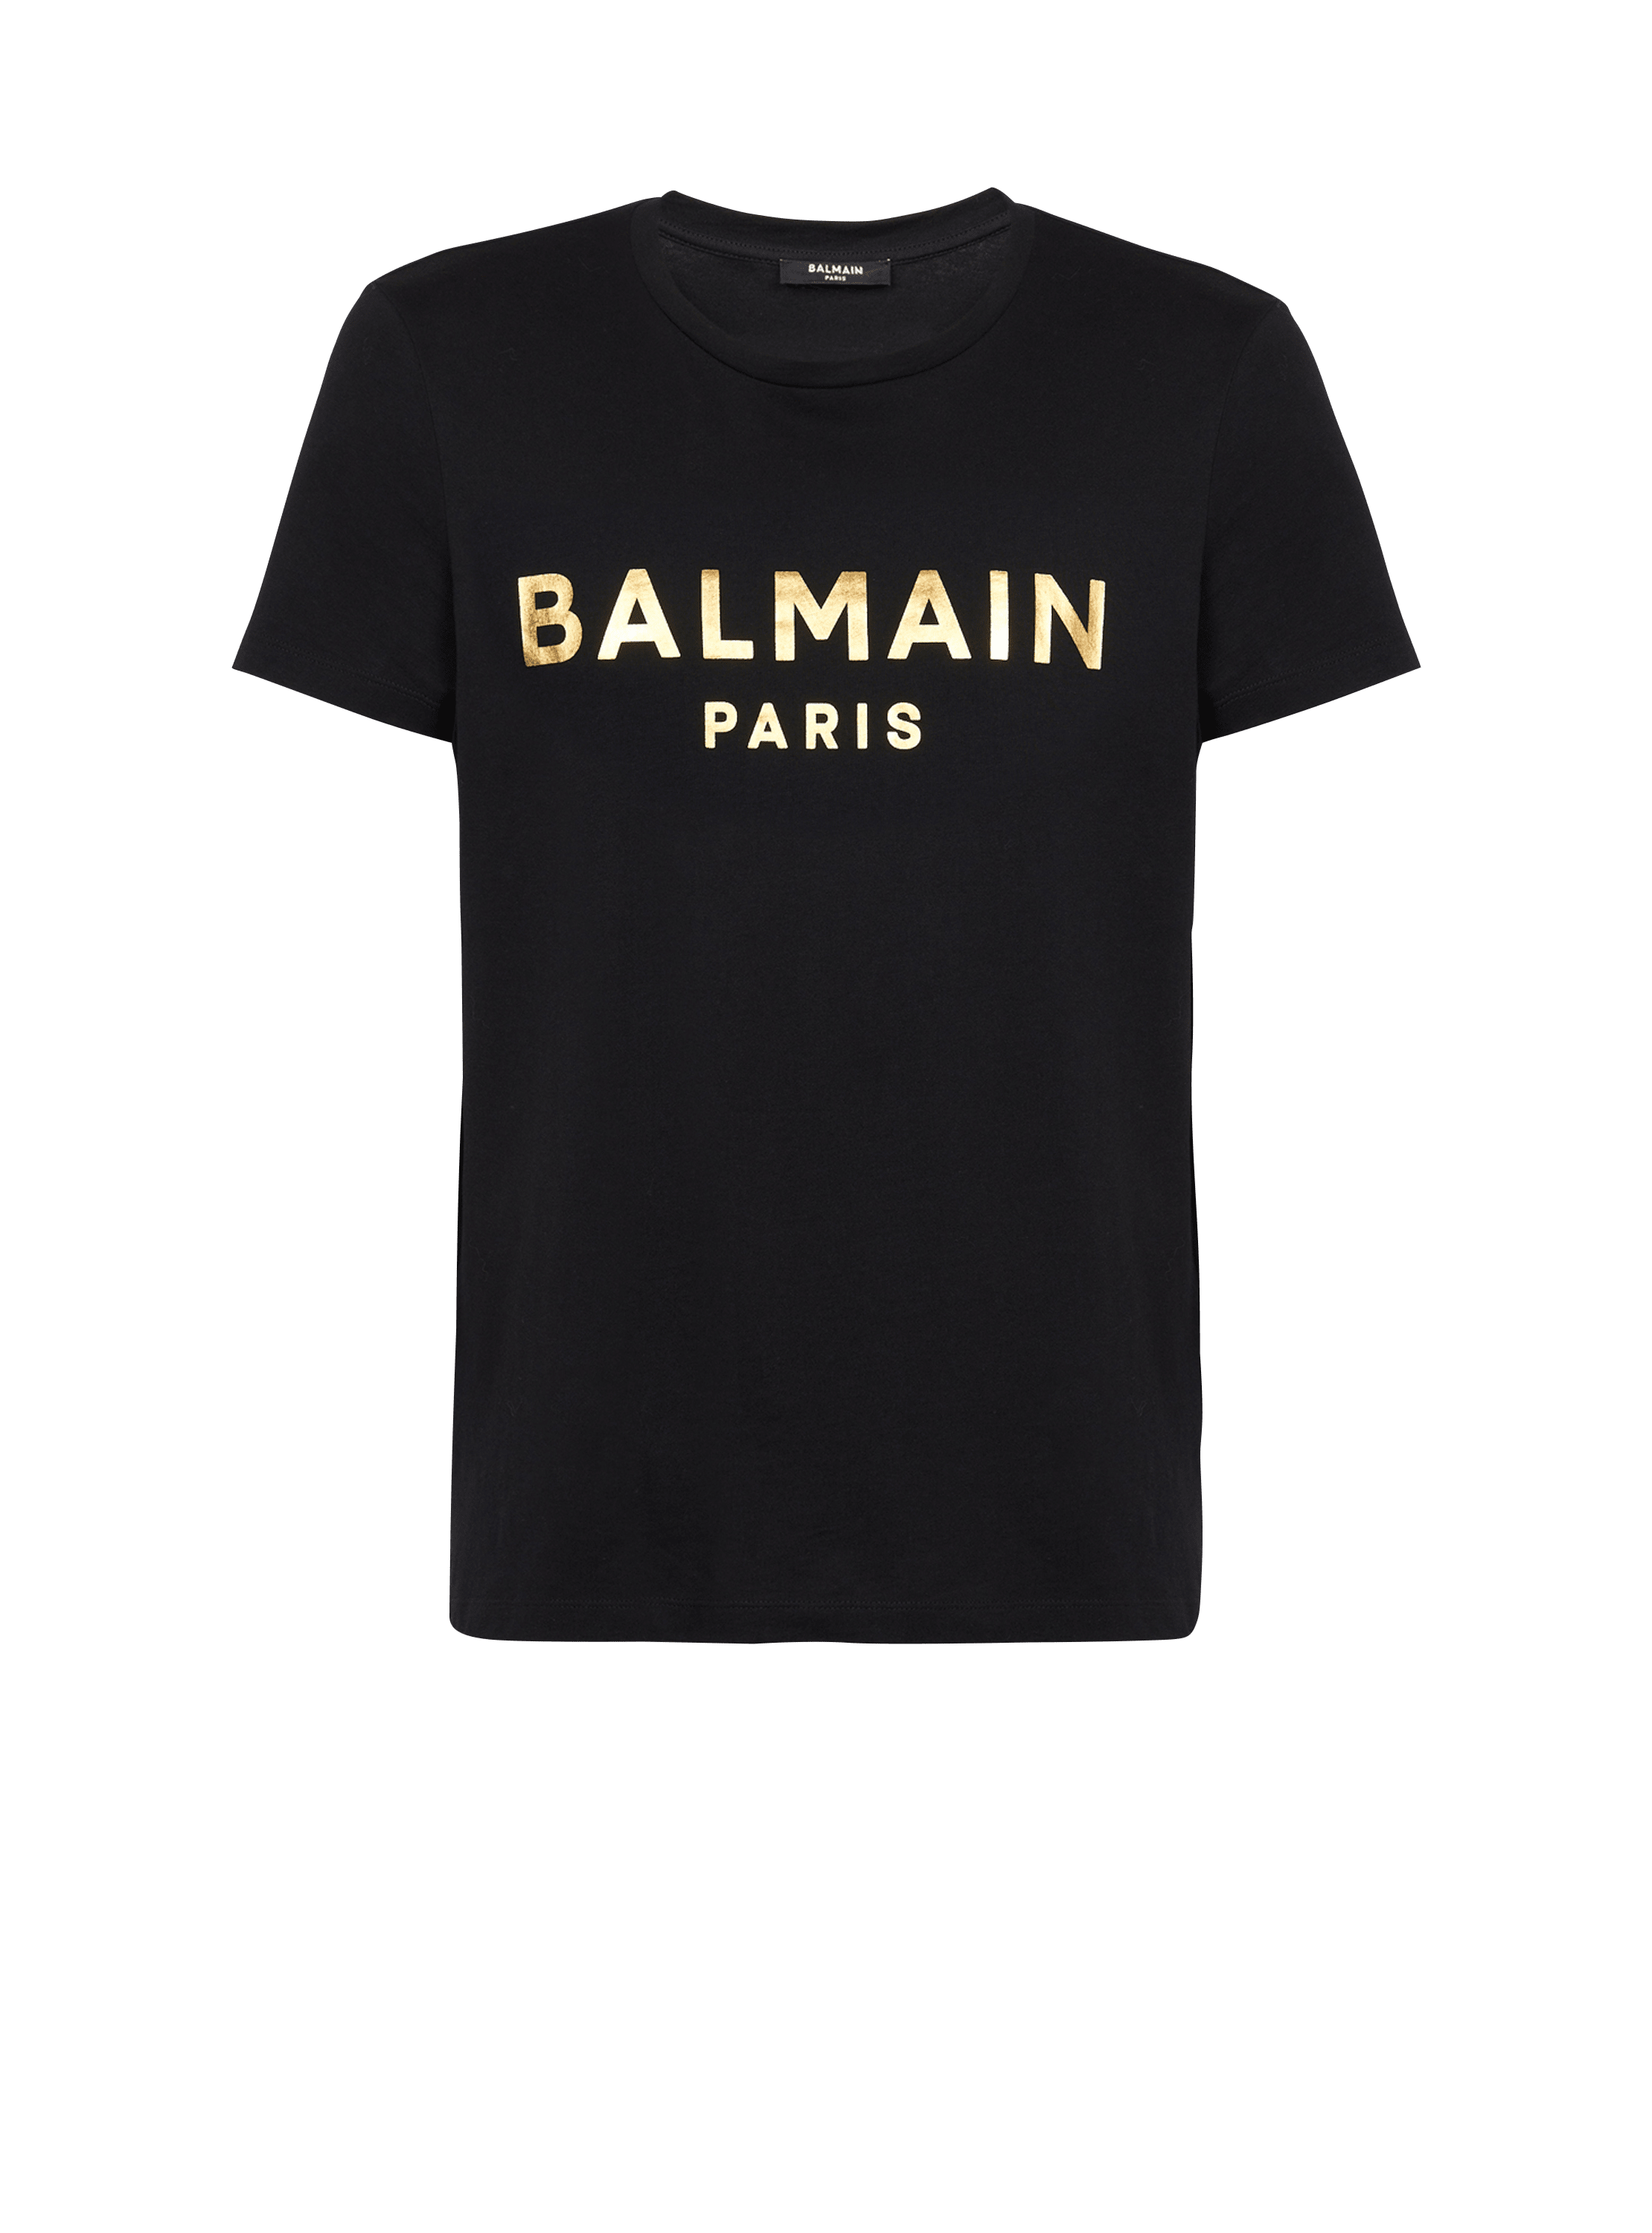 BALMAIN paris Tシャツ